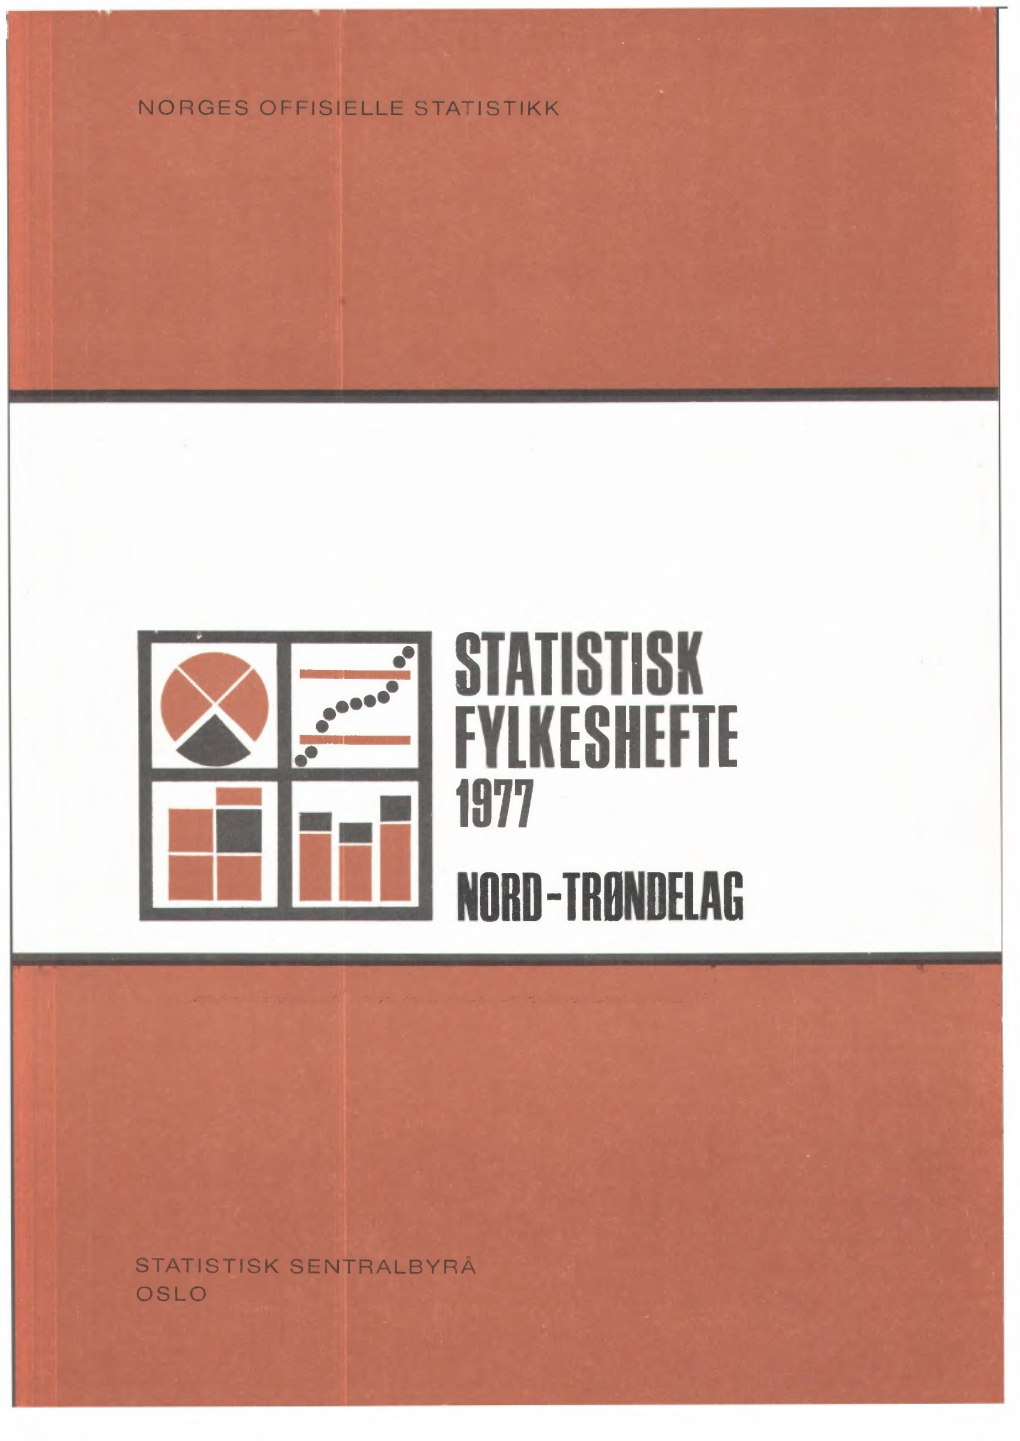 Statistisk Fylkeshefte 1977. Nord-Trøndelag